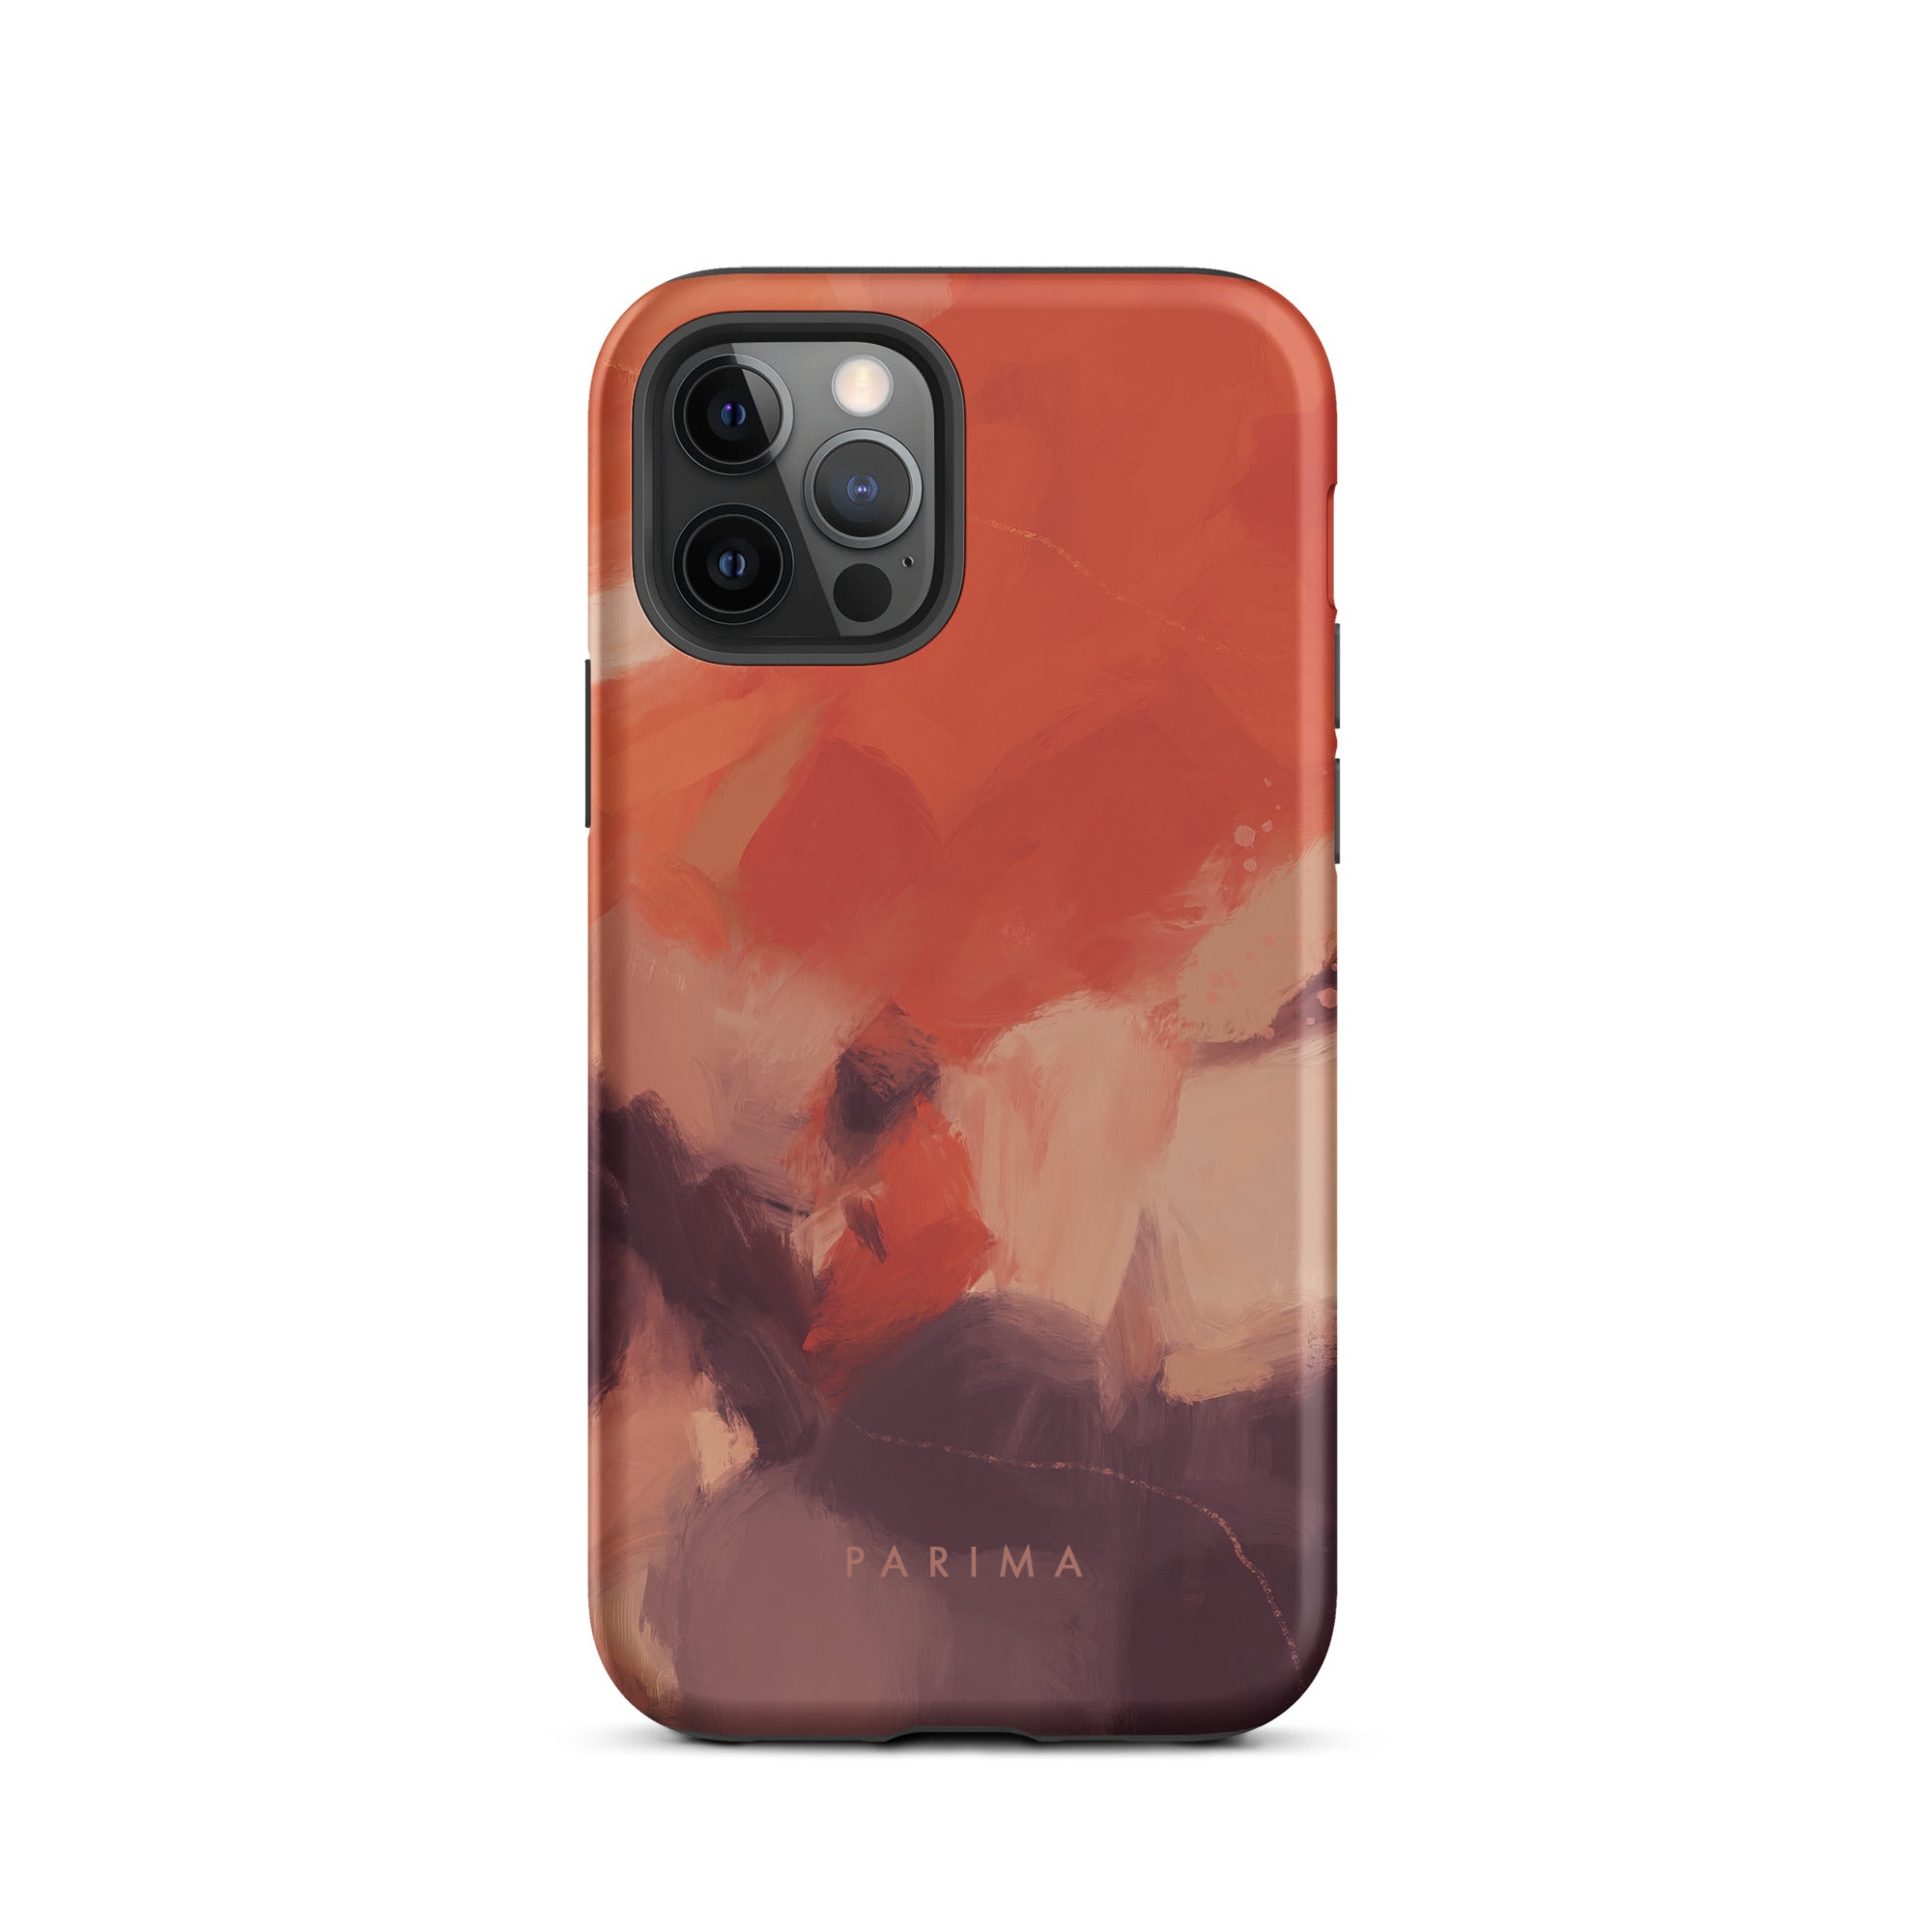 Autumn, orange and purple abstract art - iPhone 12 Pro tough case by Parima Studio